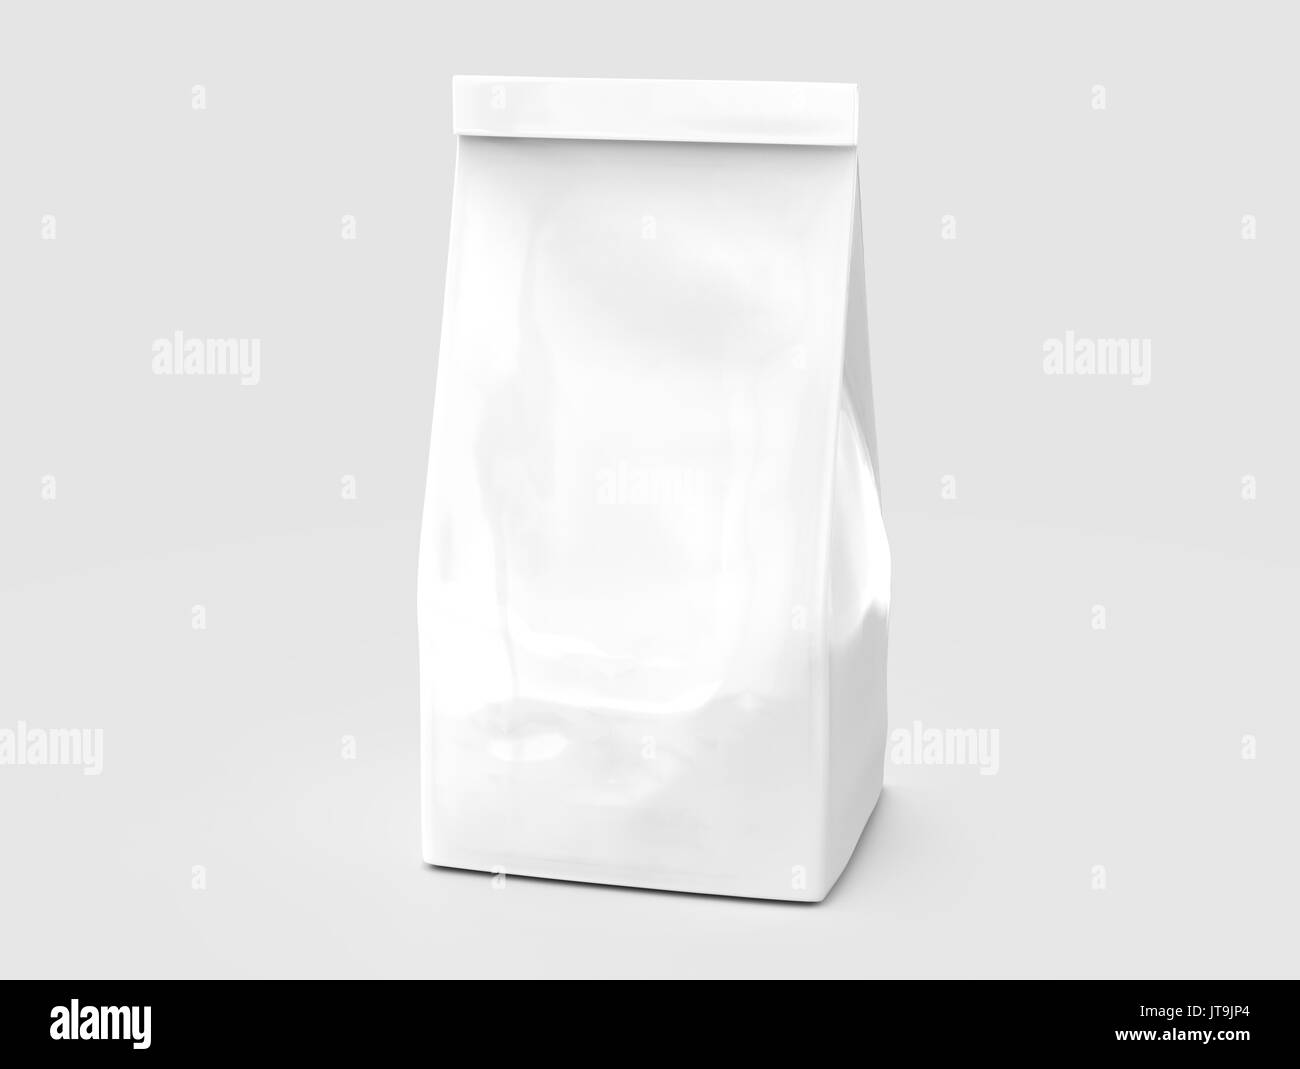 Pearl white coffee bean bag mockup, blank foil bag template in 3d rendering  Stock Photo - Alamy